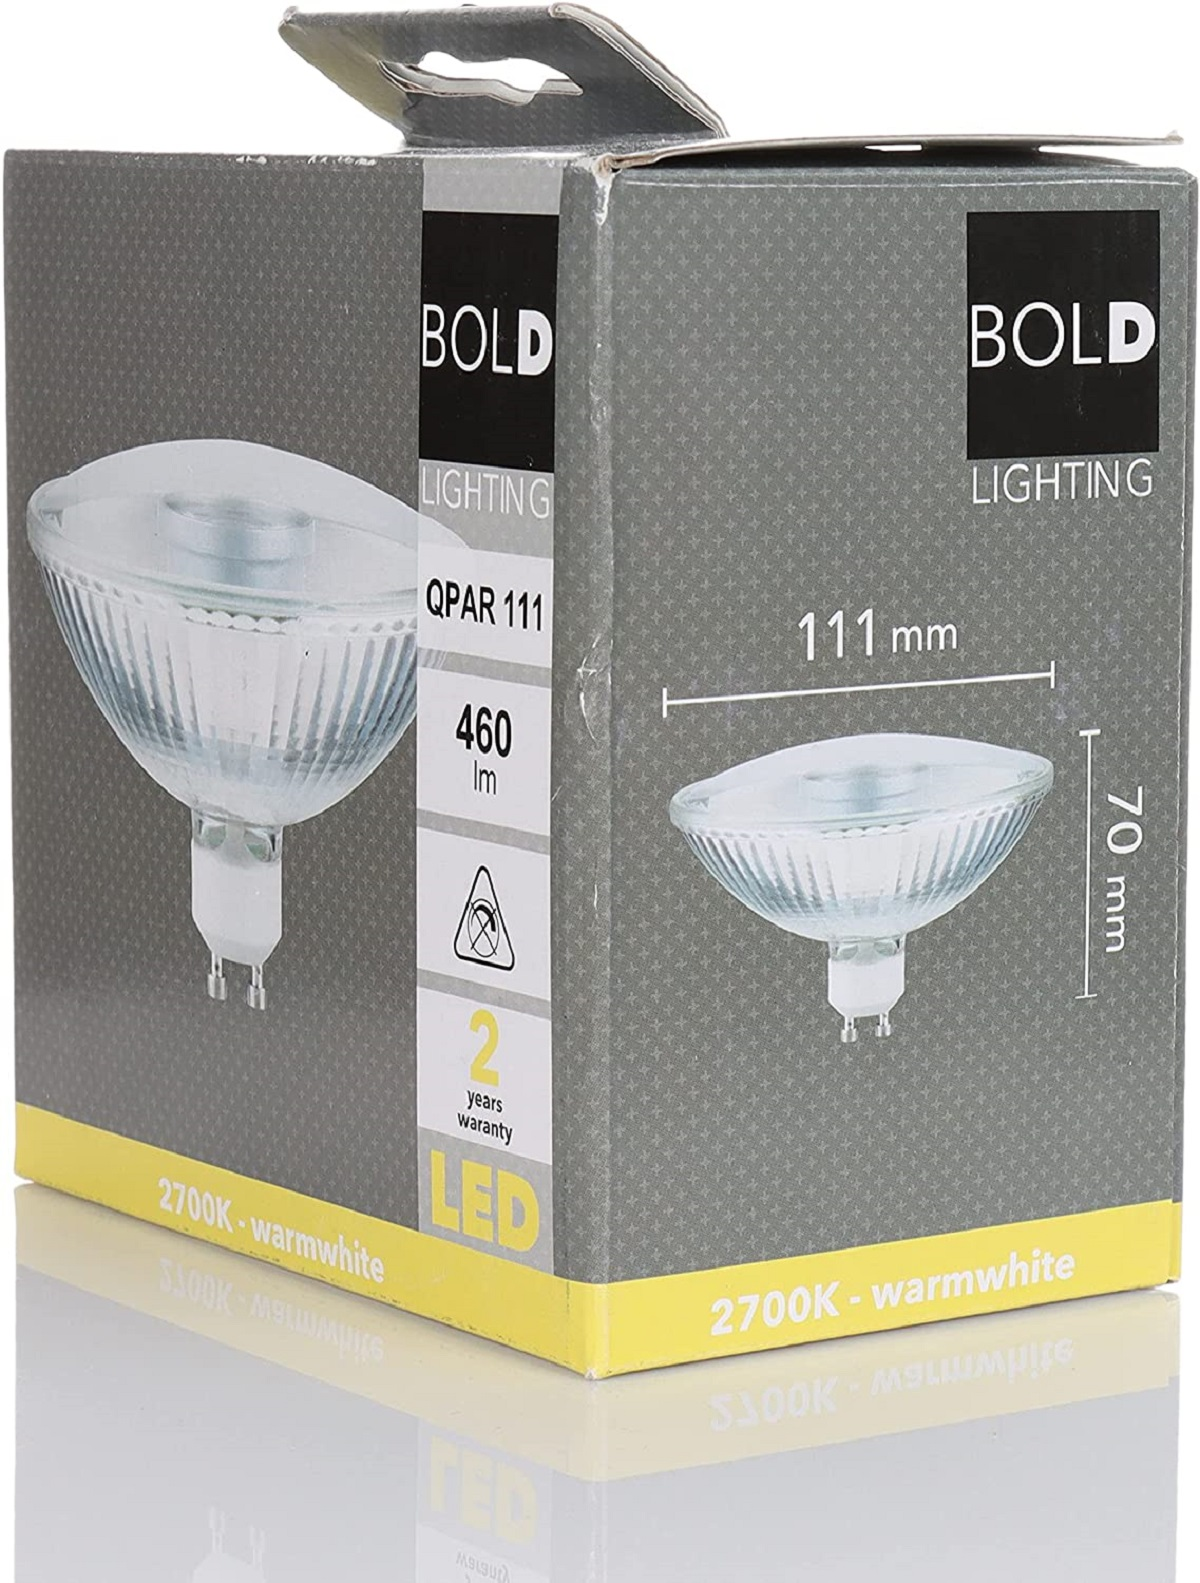 DIE BOLD Weiß GU10 LED 460 Reflektor Lampe Quinn Lumen LED Warm